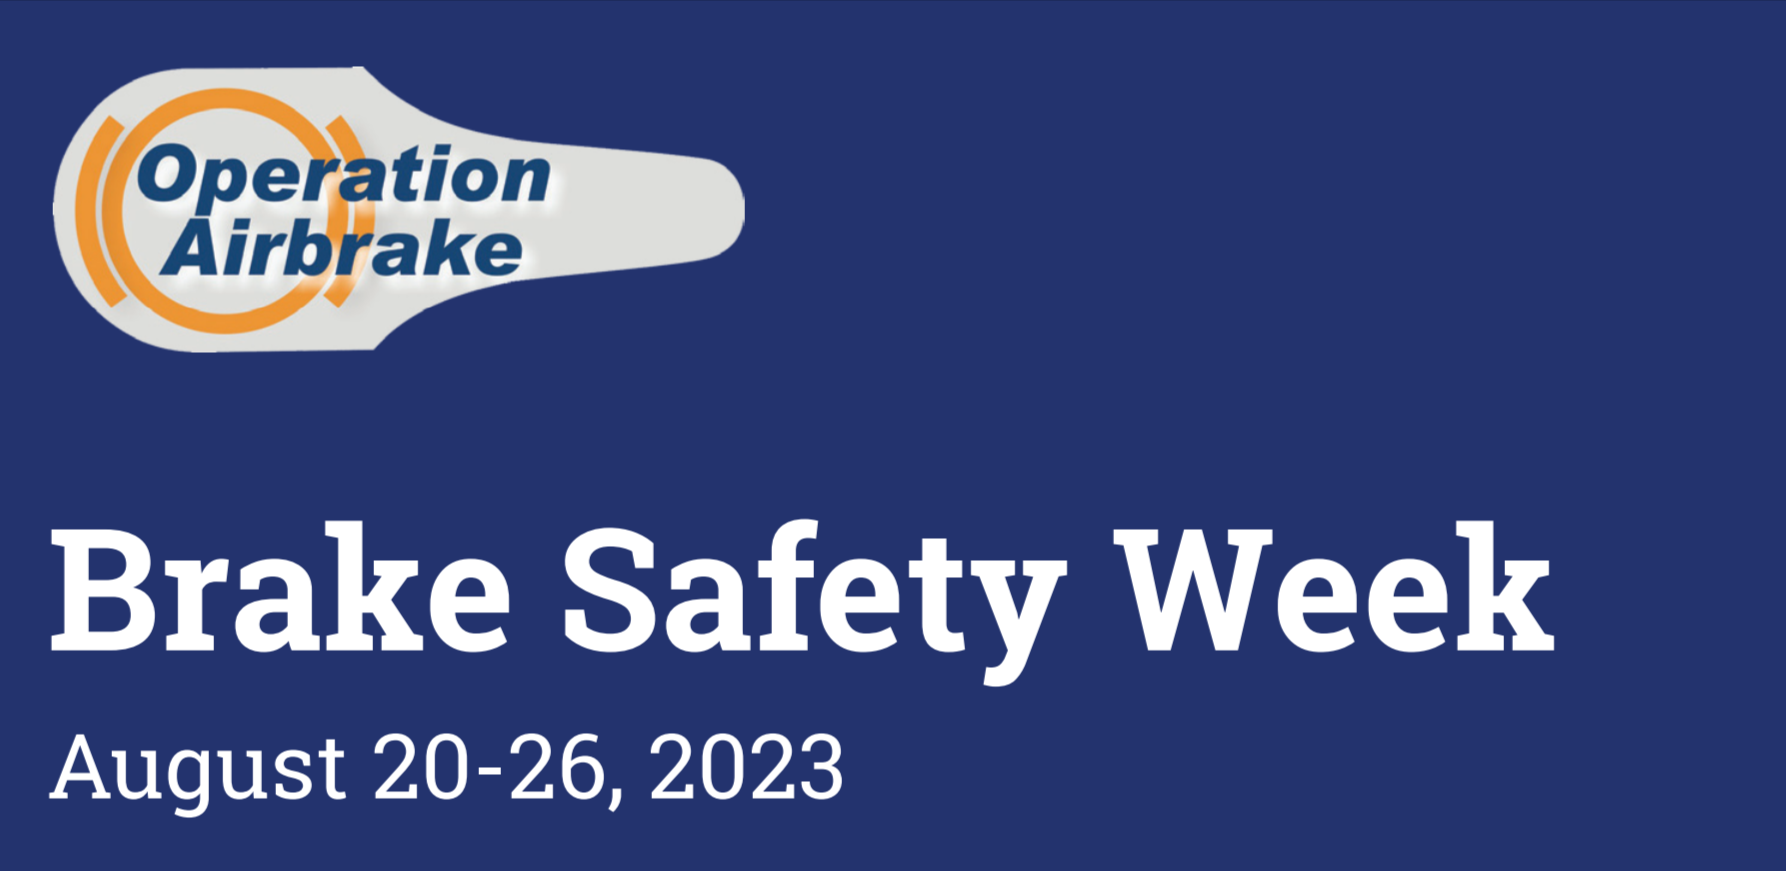 Commercial Vehicle Safety Alliance (CVSA) Brake Safety Week 2023